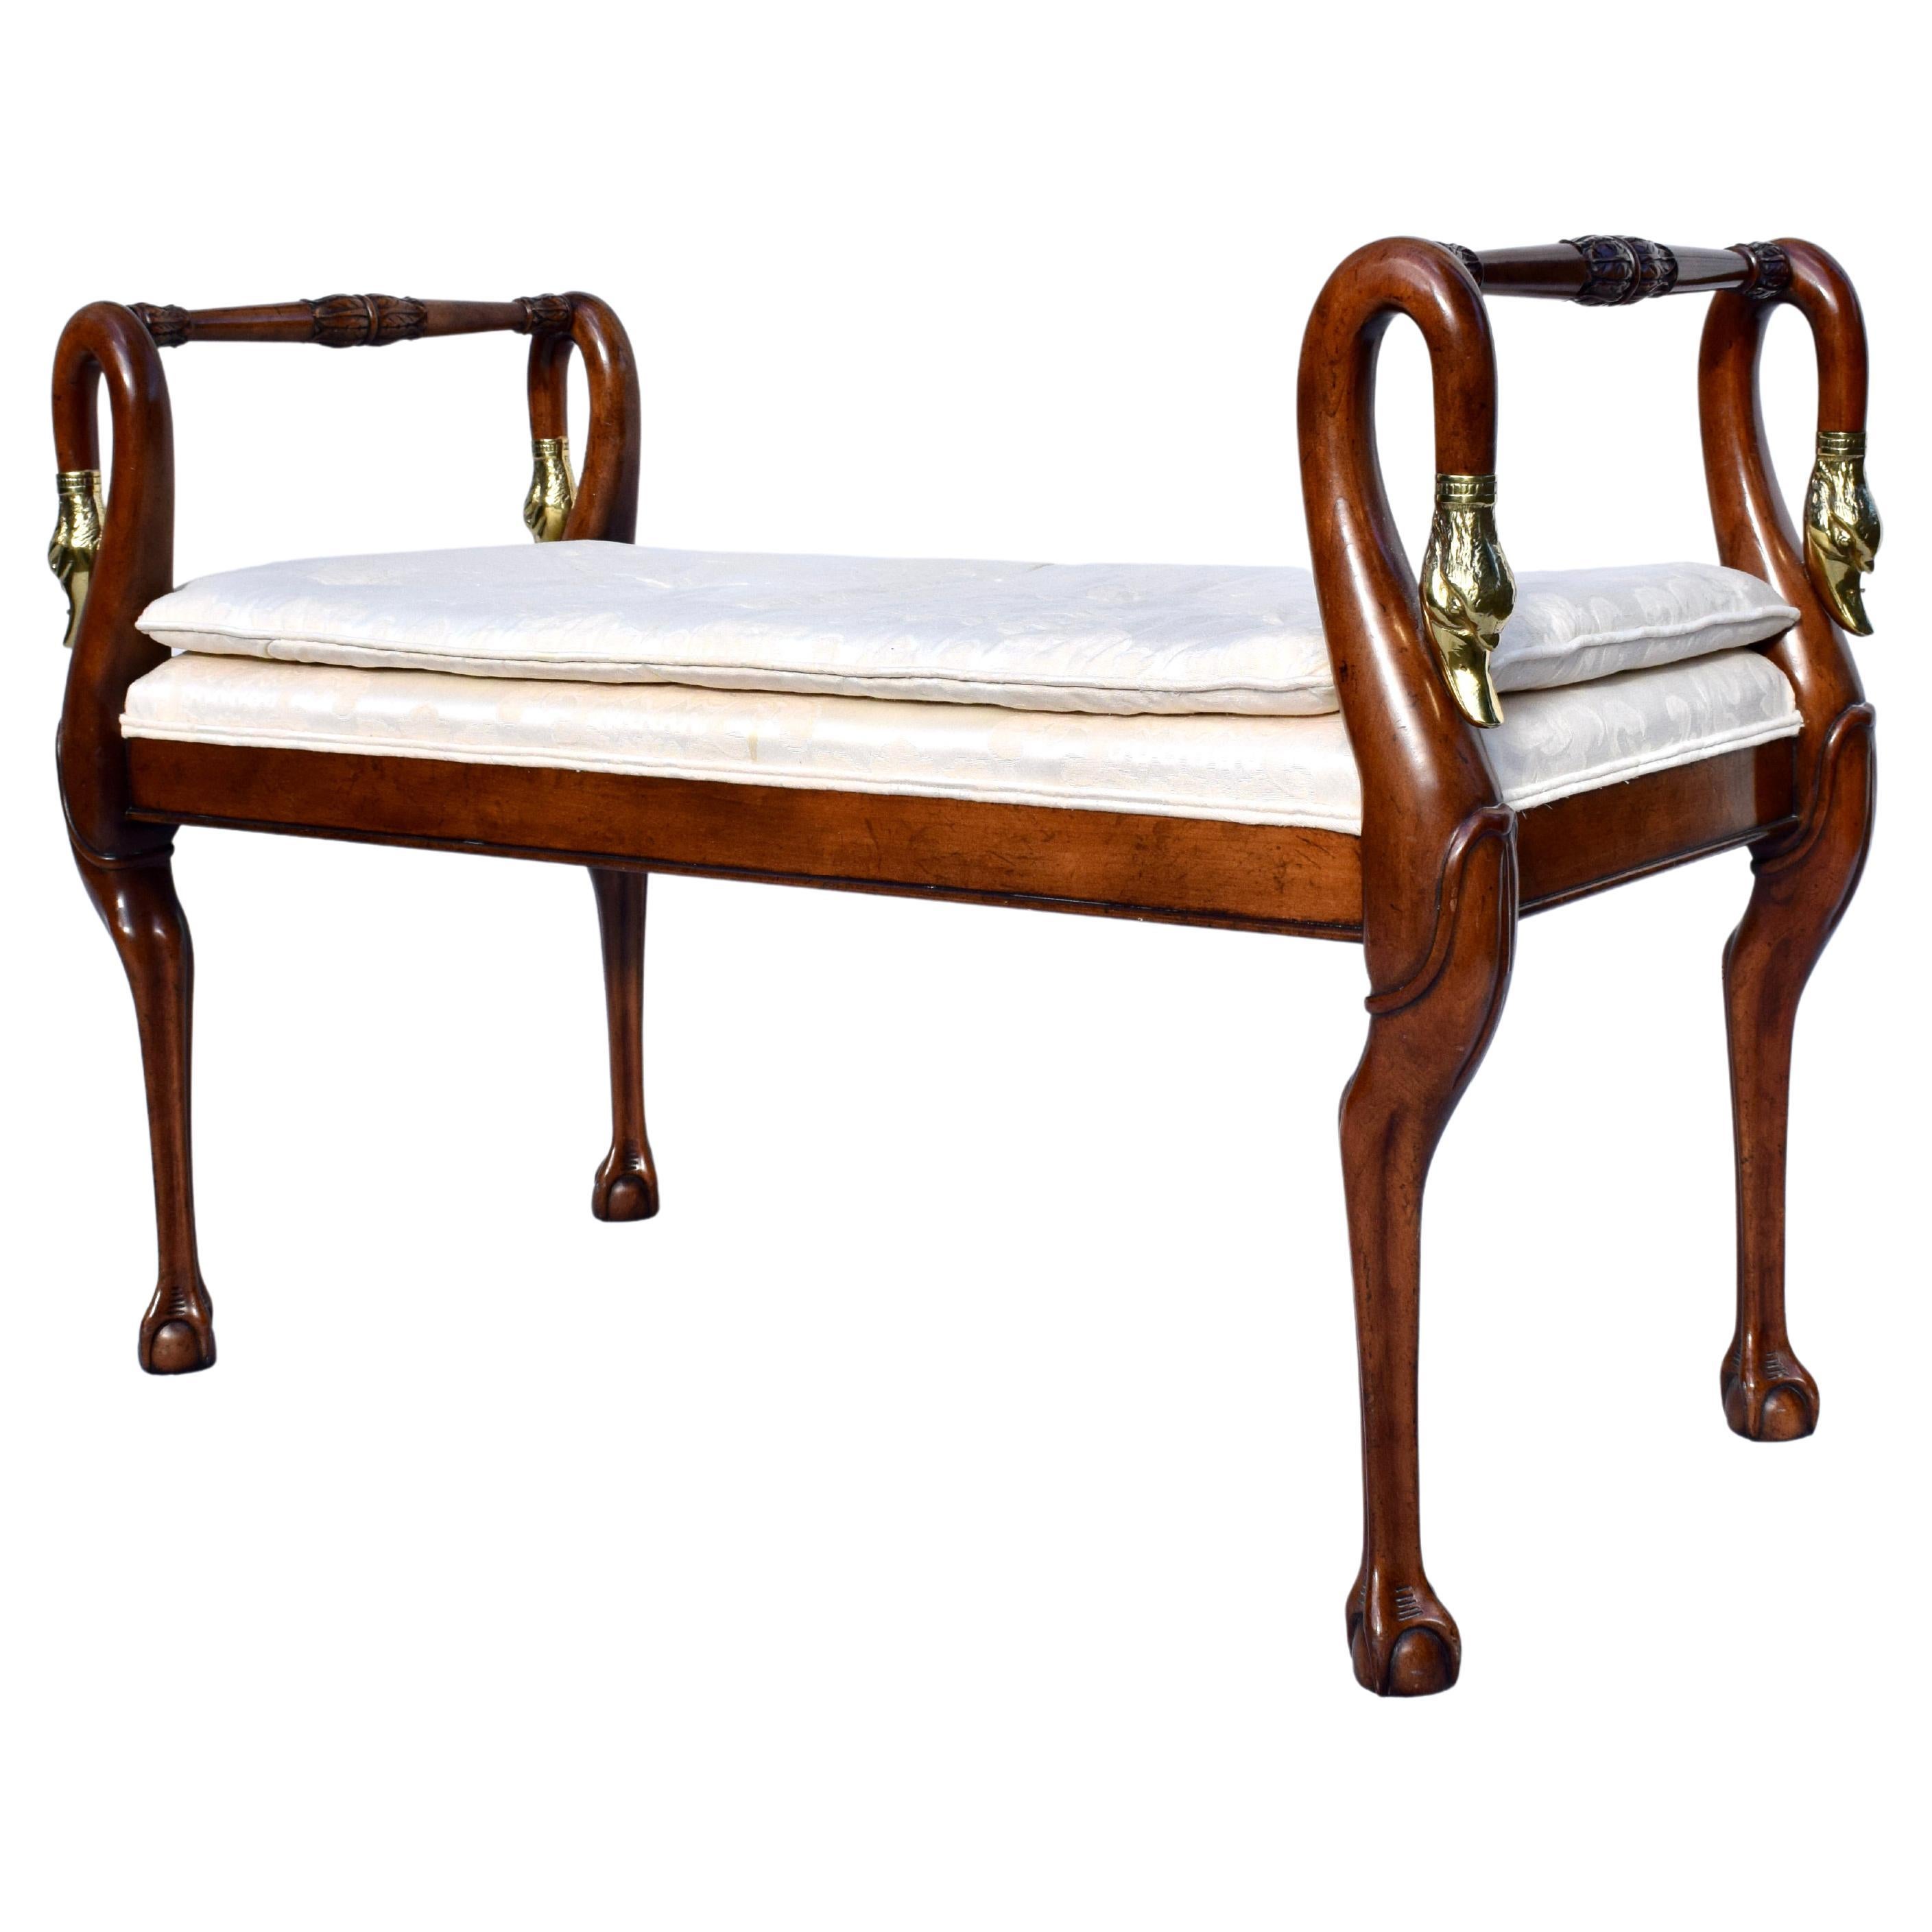 Regency Style Swan Neck Bench By Baker Furniture